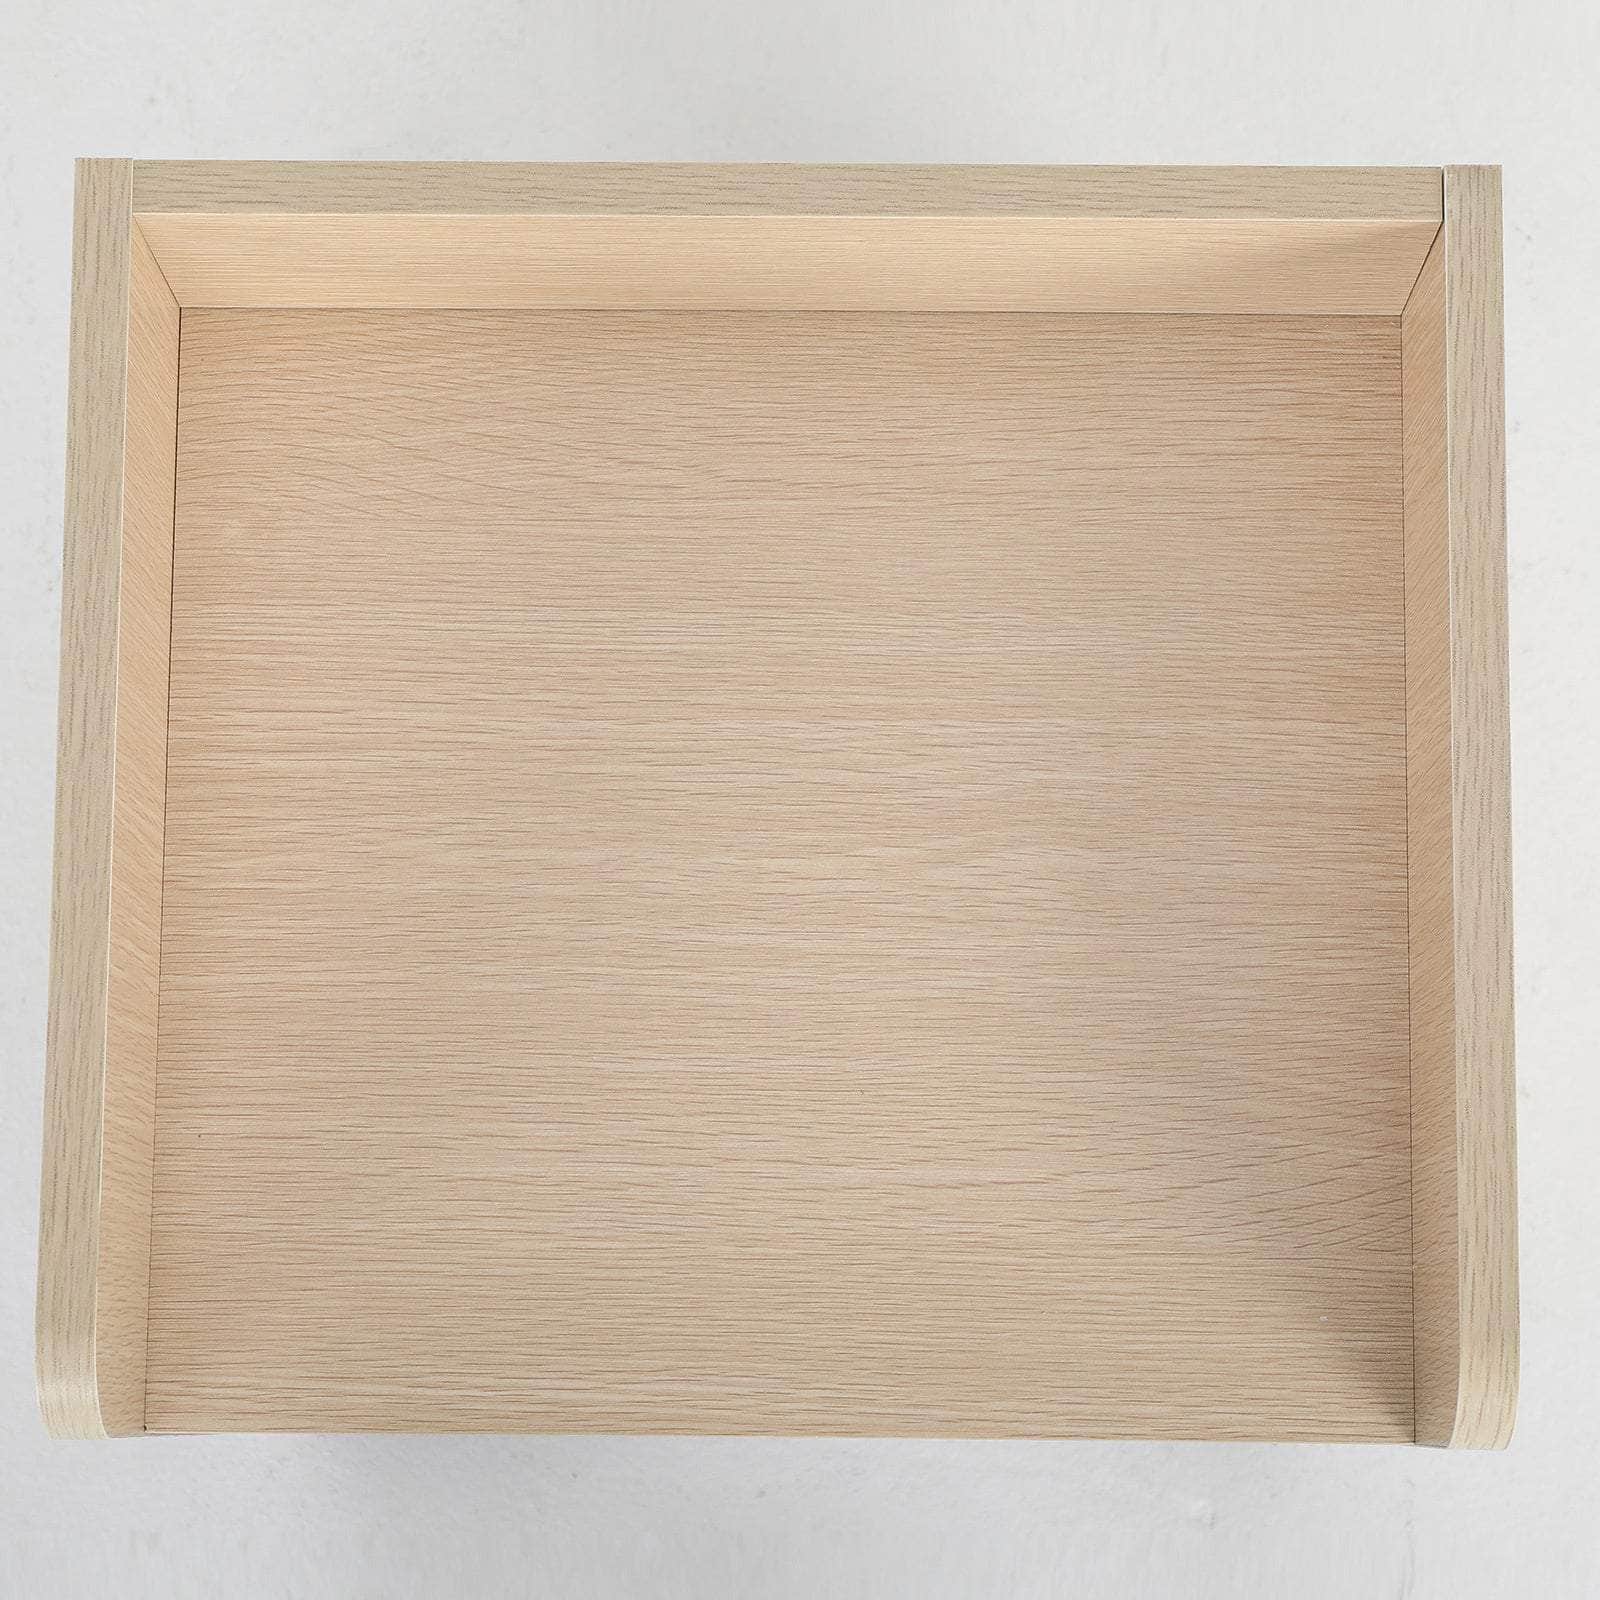 Lark Oak: Bedroom Nightstand With Drawer And Shelves